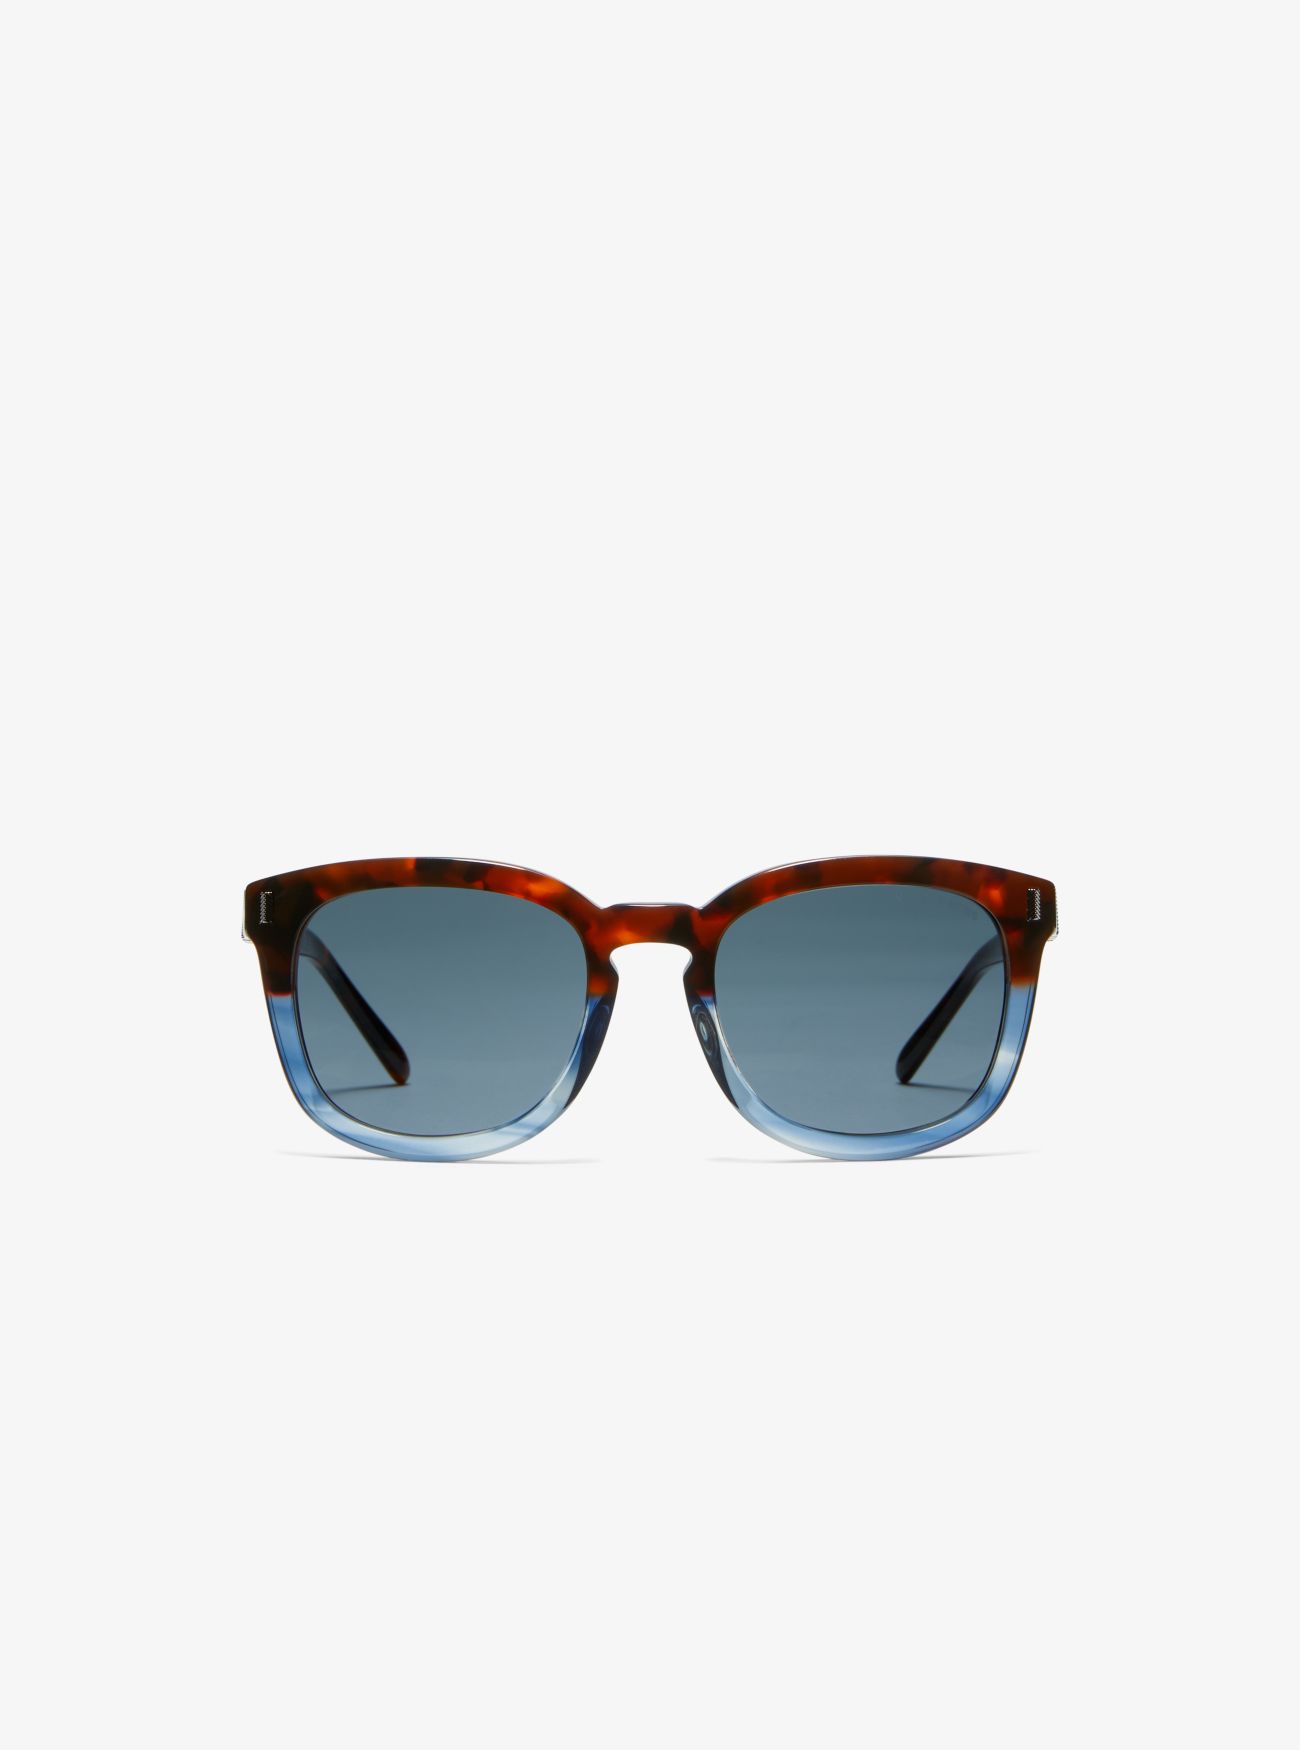 MK Grand Teton Sunglasses - Brown - Michael Kors